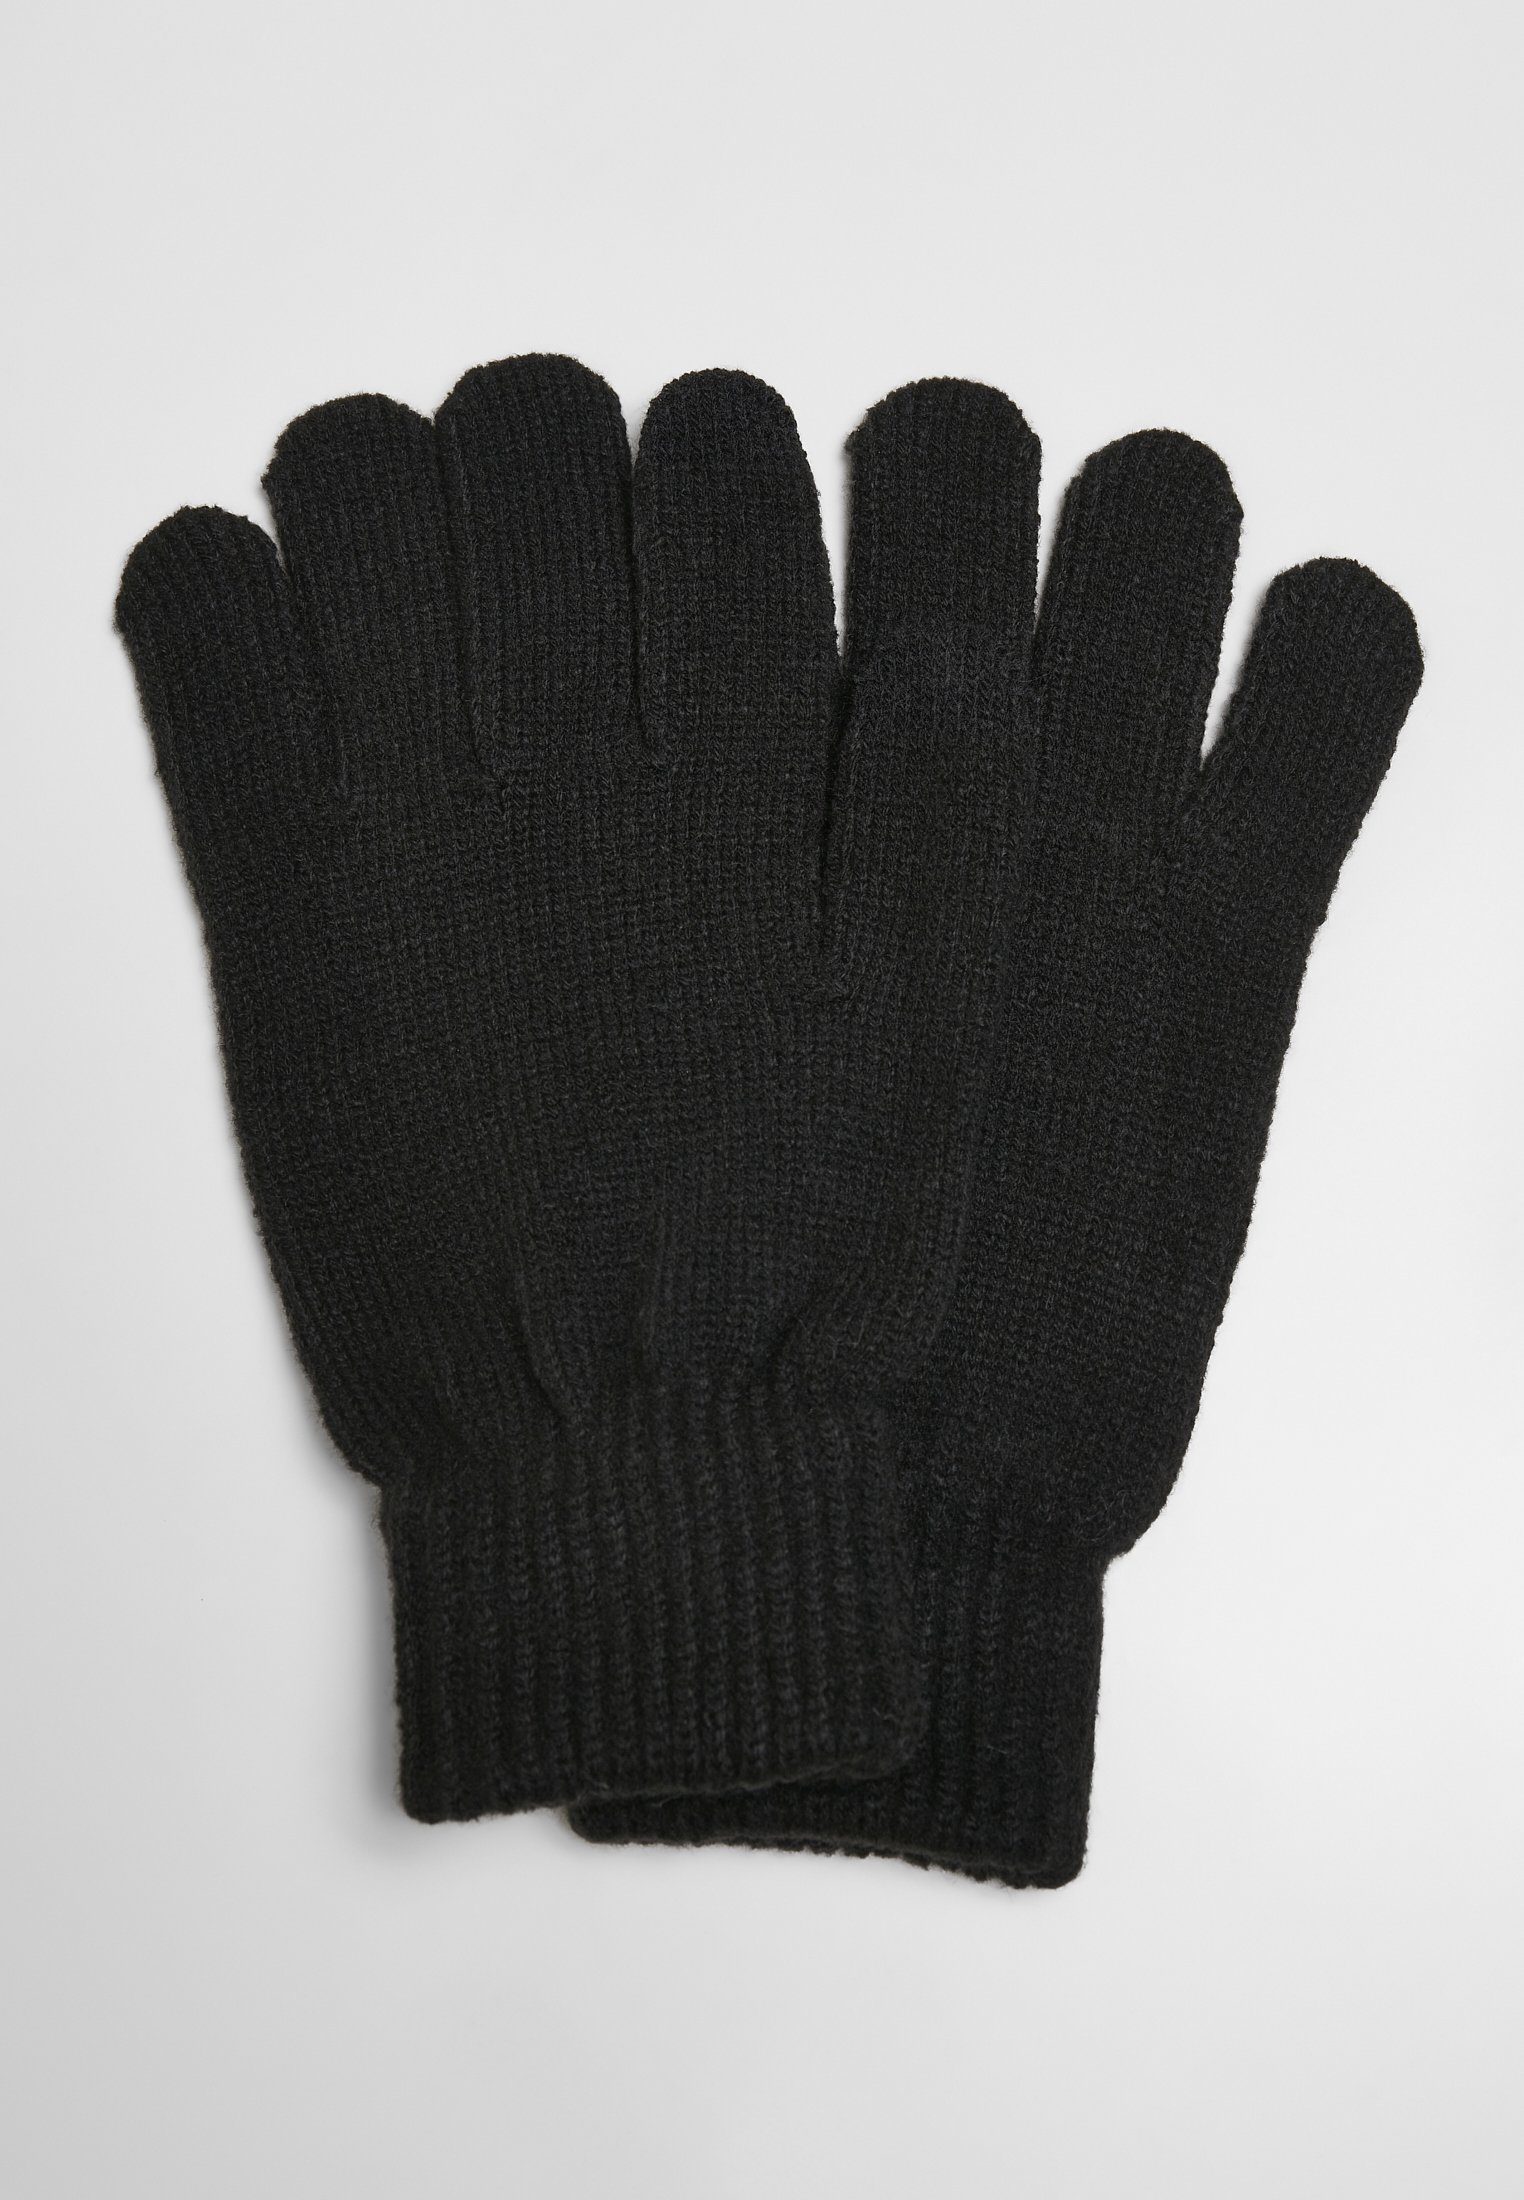 NASA Tee MisterTee Knit Glove Mister Accessoires Baumwollhandschuhe